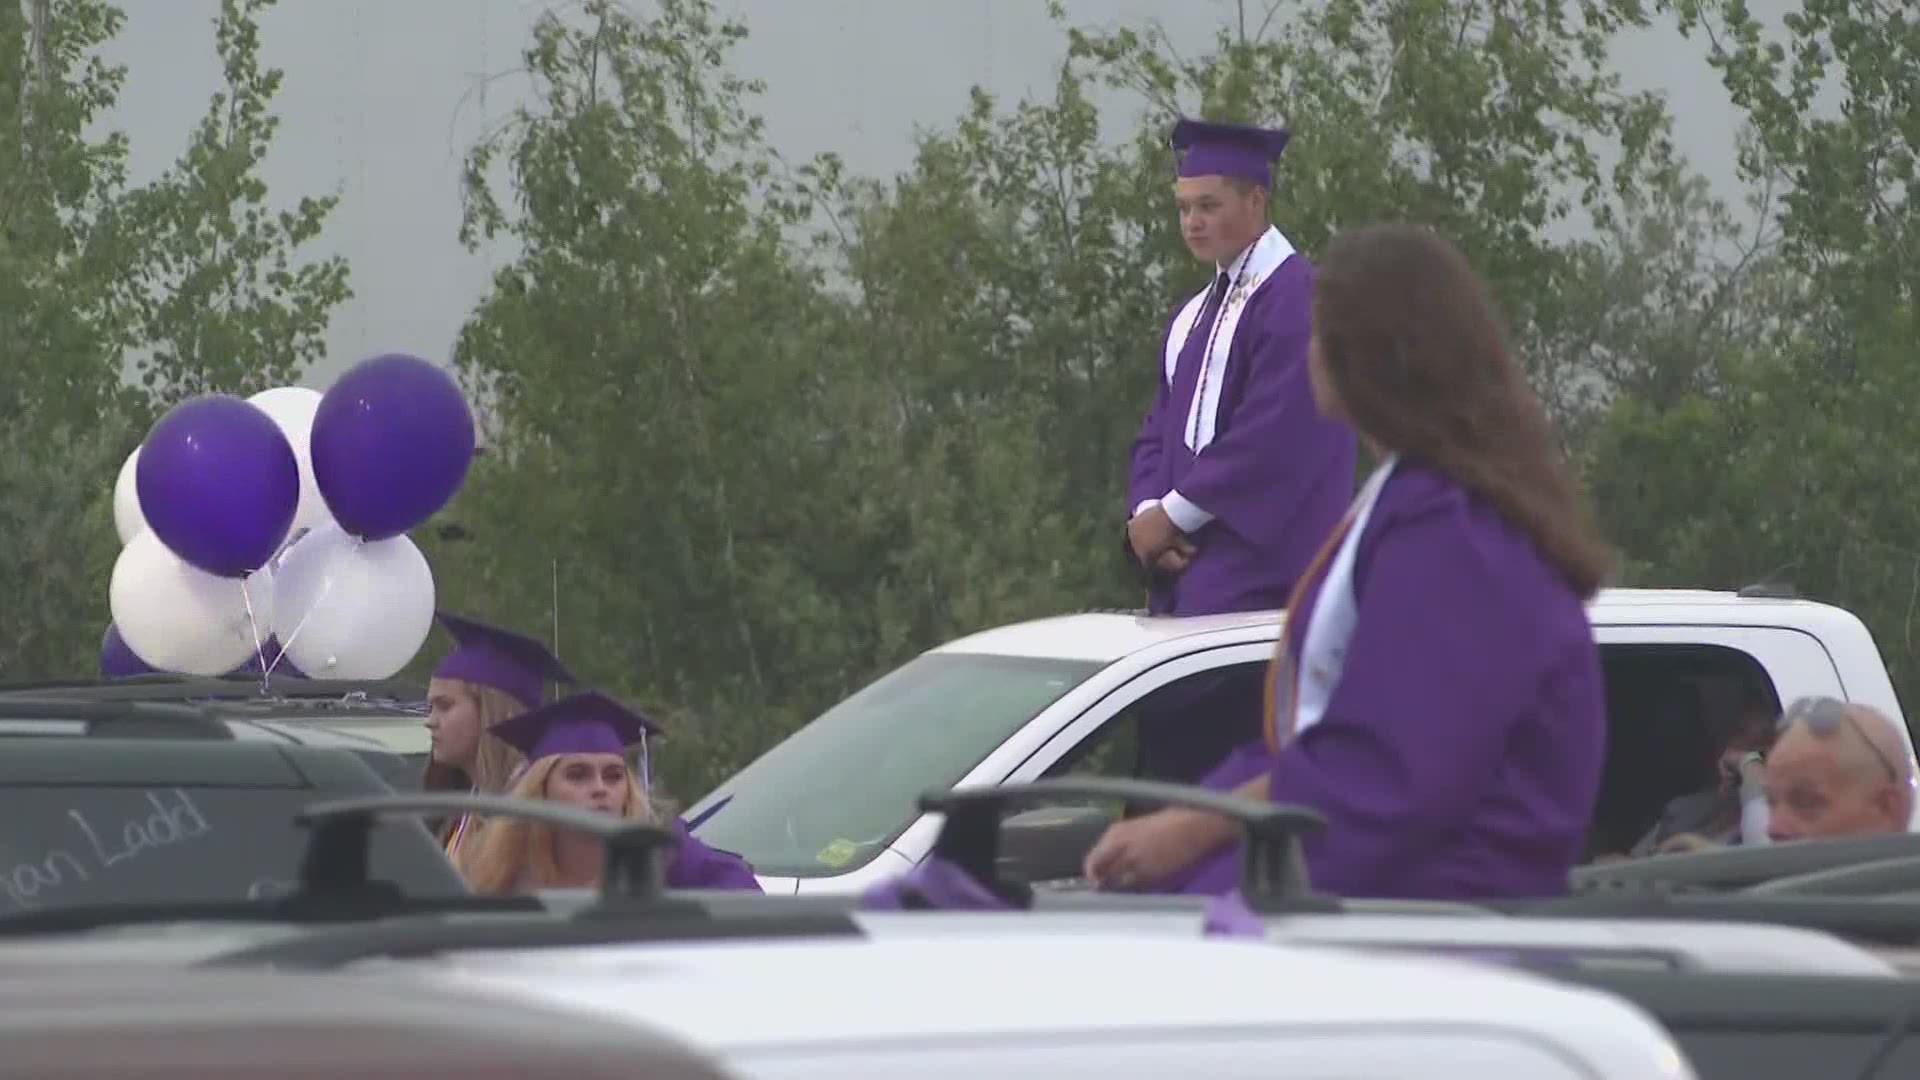 Waterville High School has drive-in graduation ceremony amid coronavirus, COVID-19 pandemic